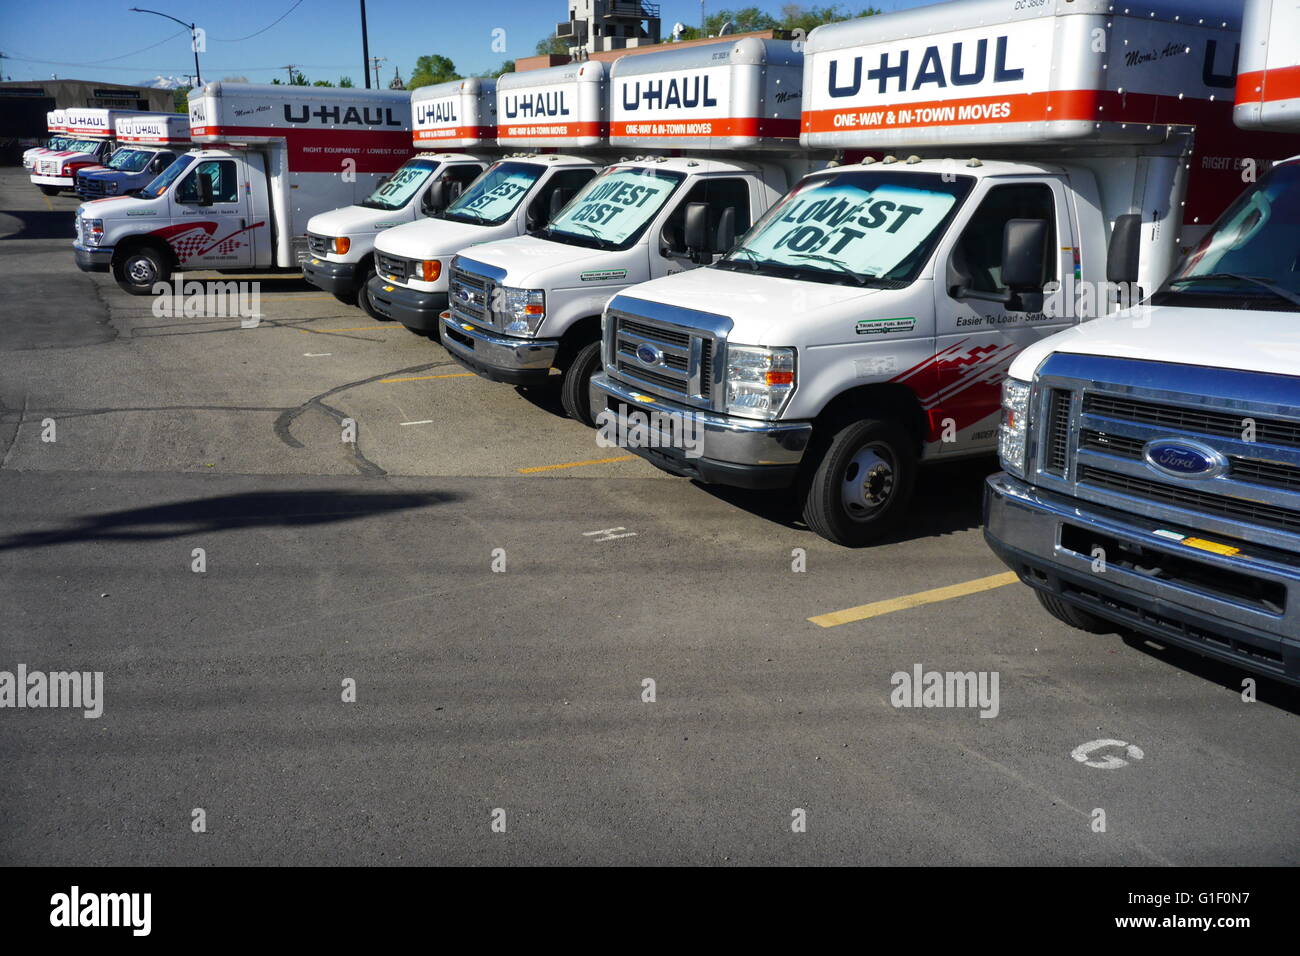 U-Haul self-transportation and storage trucks on a rental lot in suburban Utah. Stock Photo